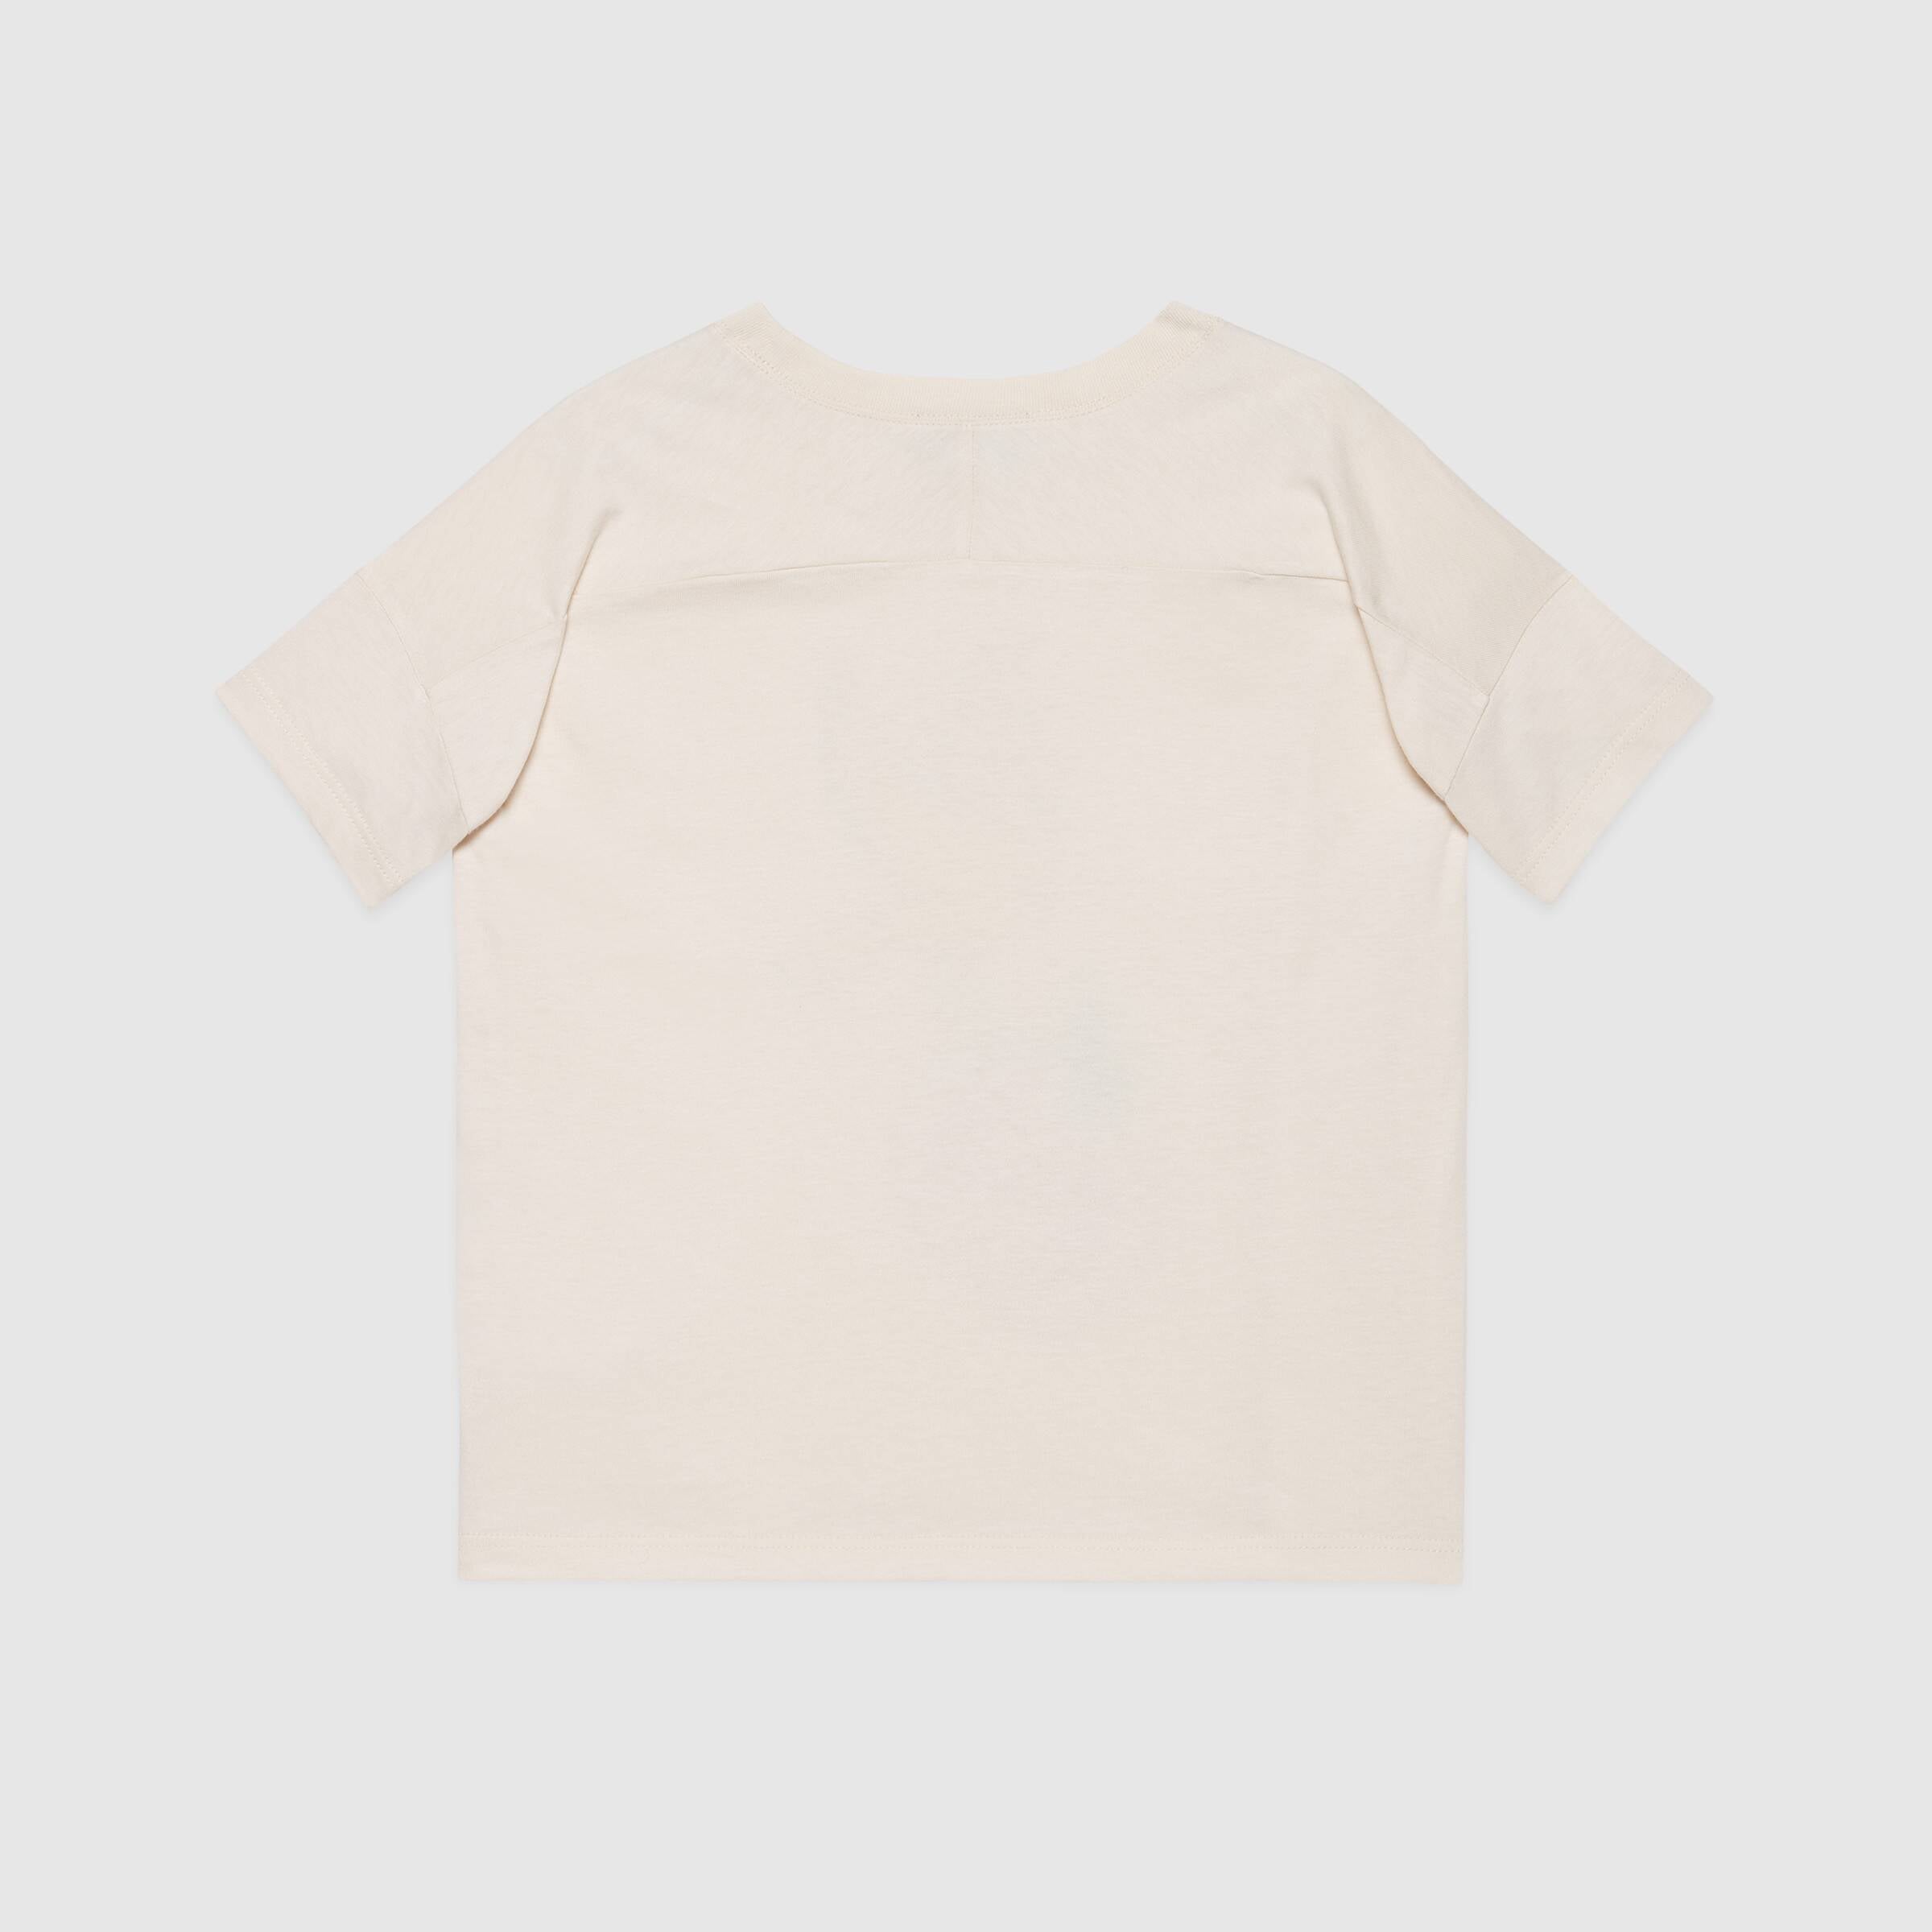 Girls White Printing Cotton T-Shirt